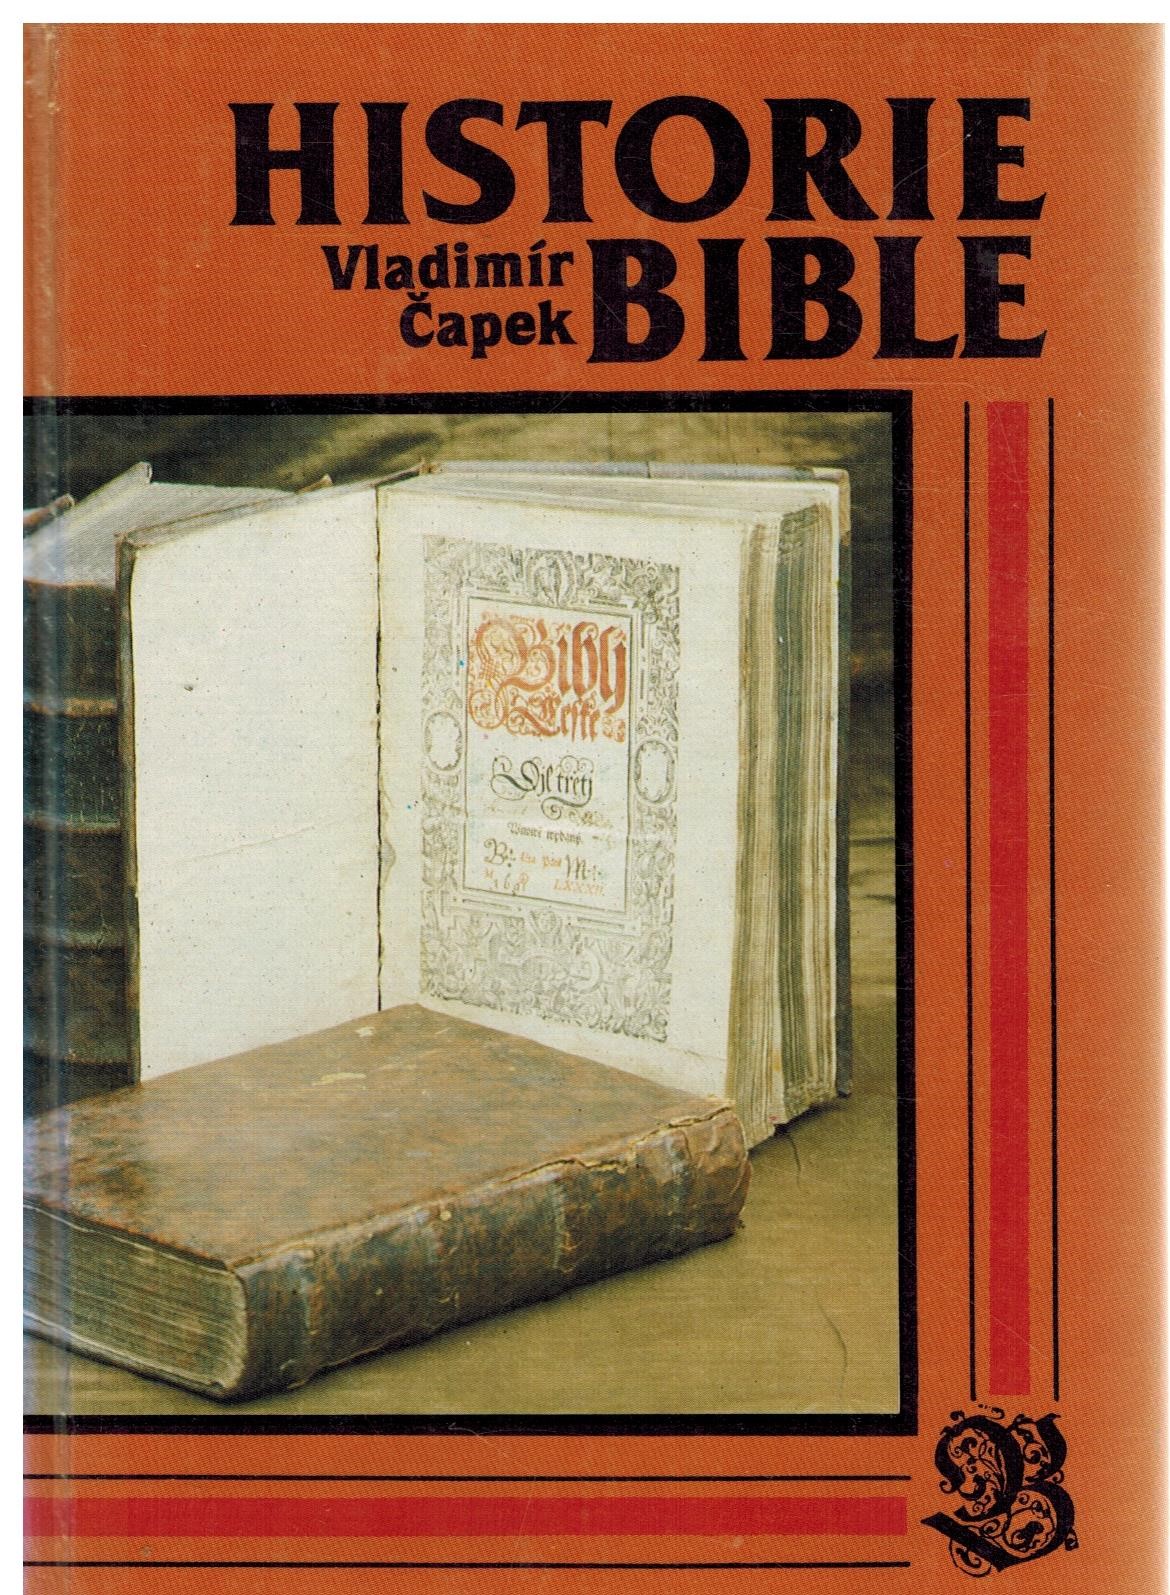 HISTORIE BIBLE